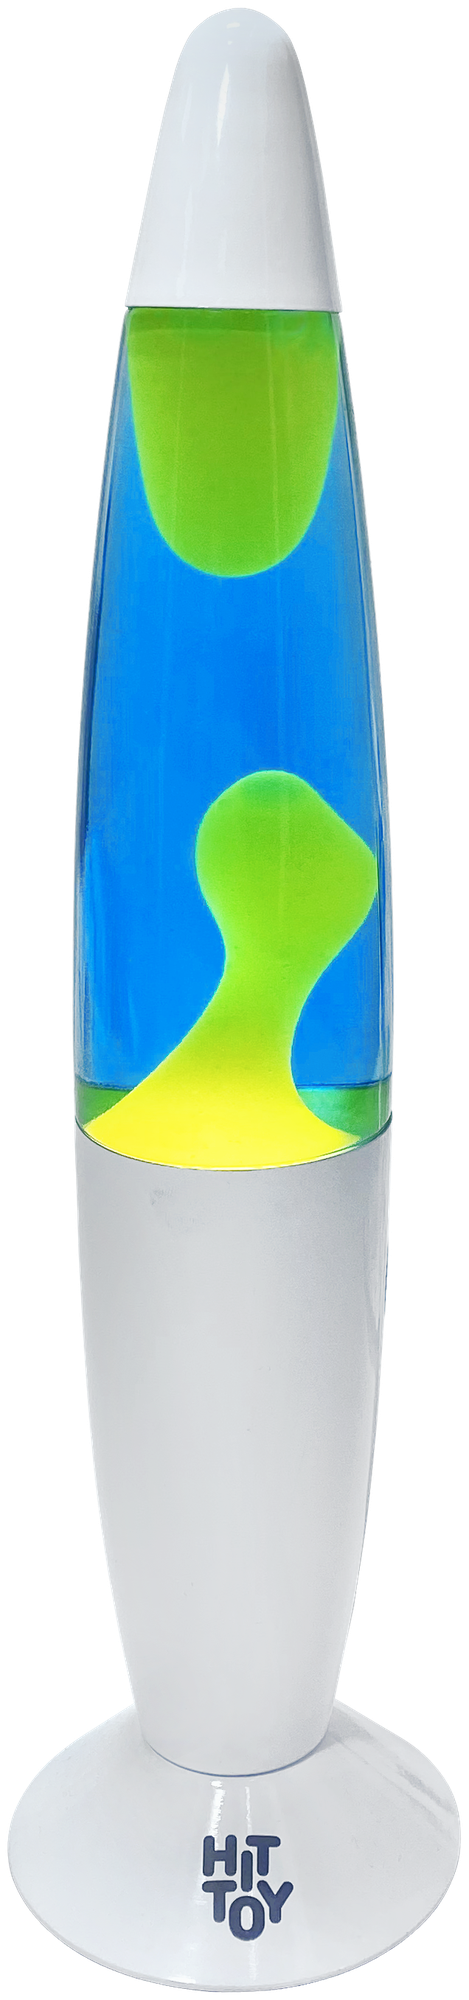 Лава-лампа 41 см Белый, Синий/Желтый - фотография № 1